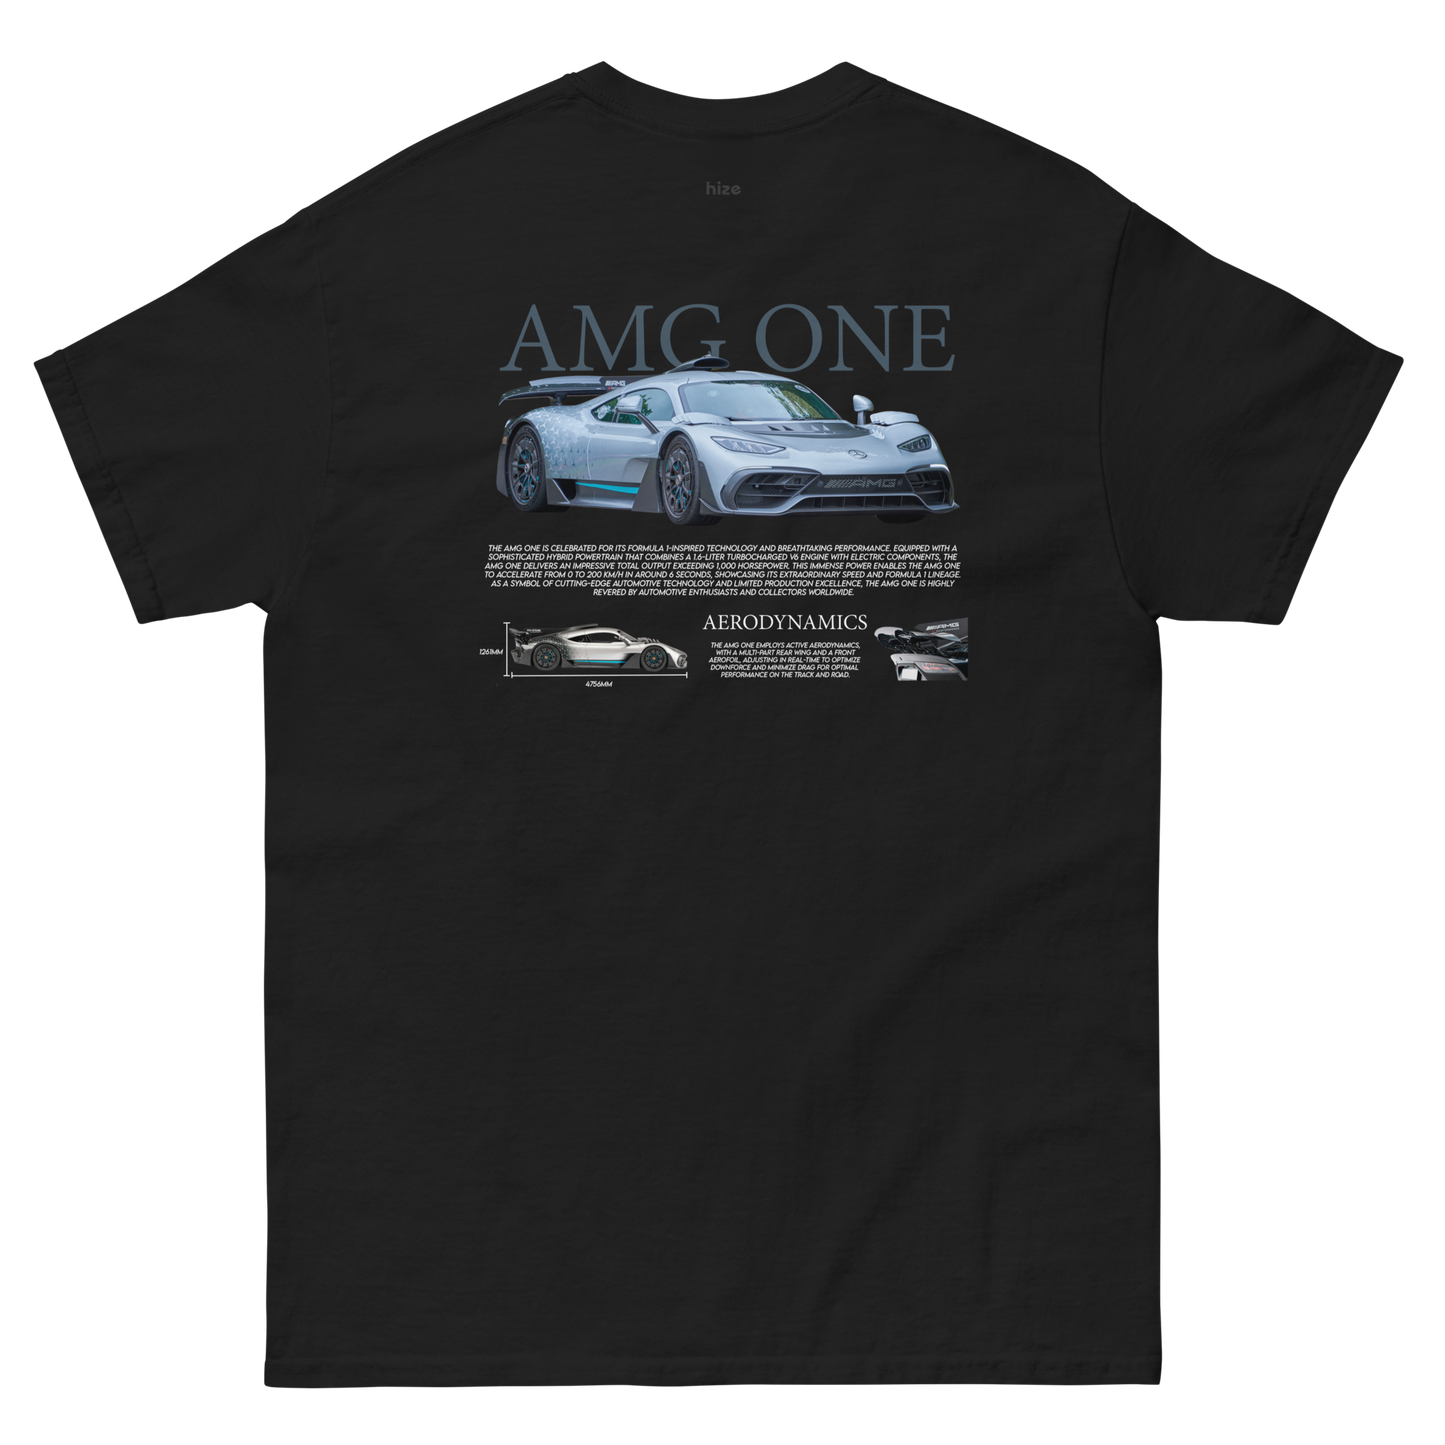 AMG ONE T-shirt